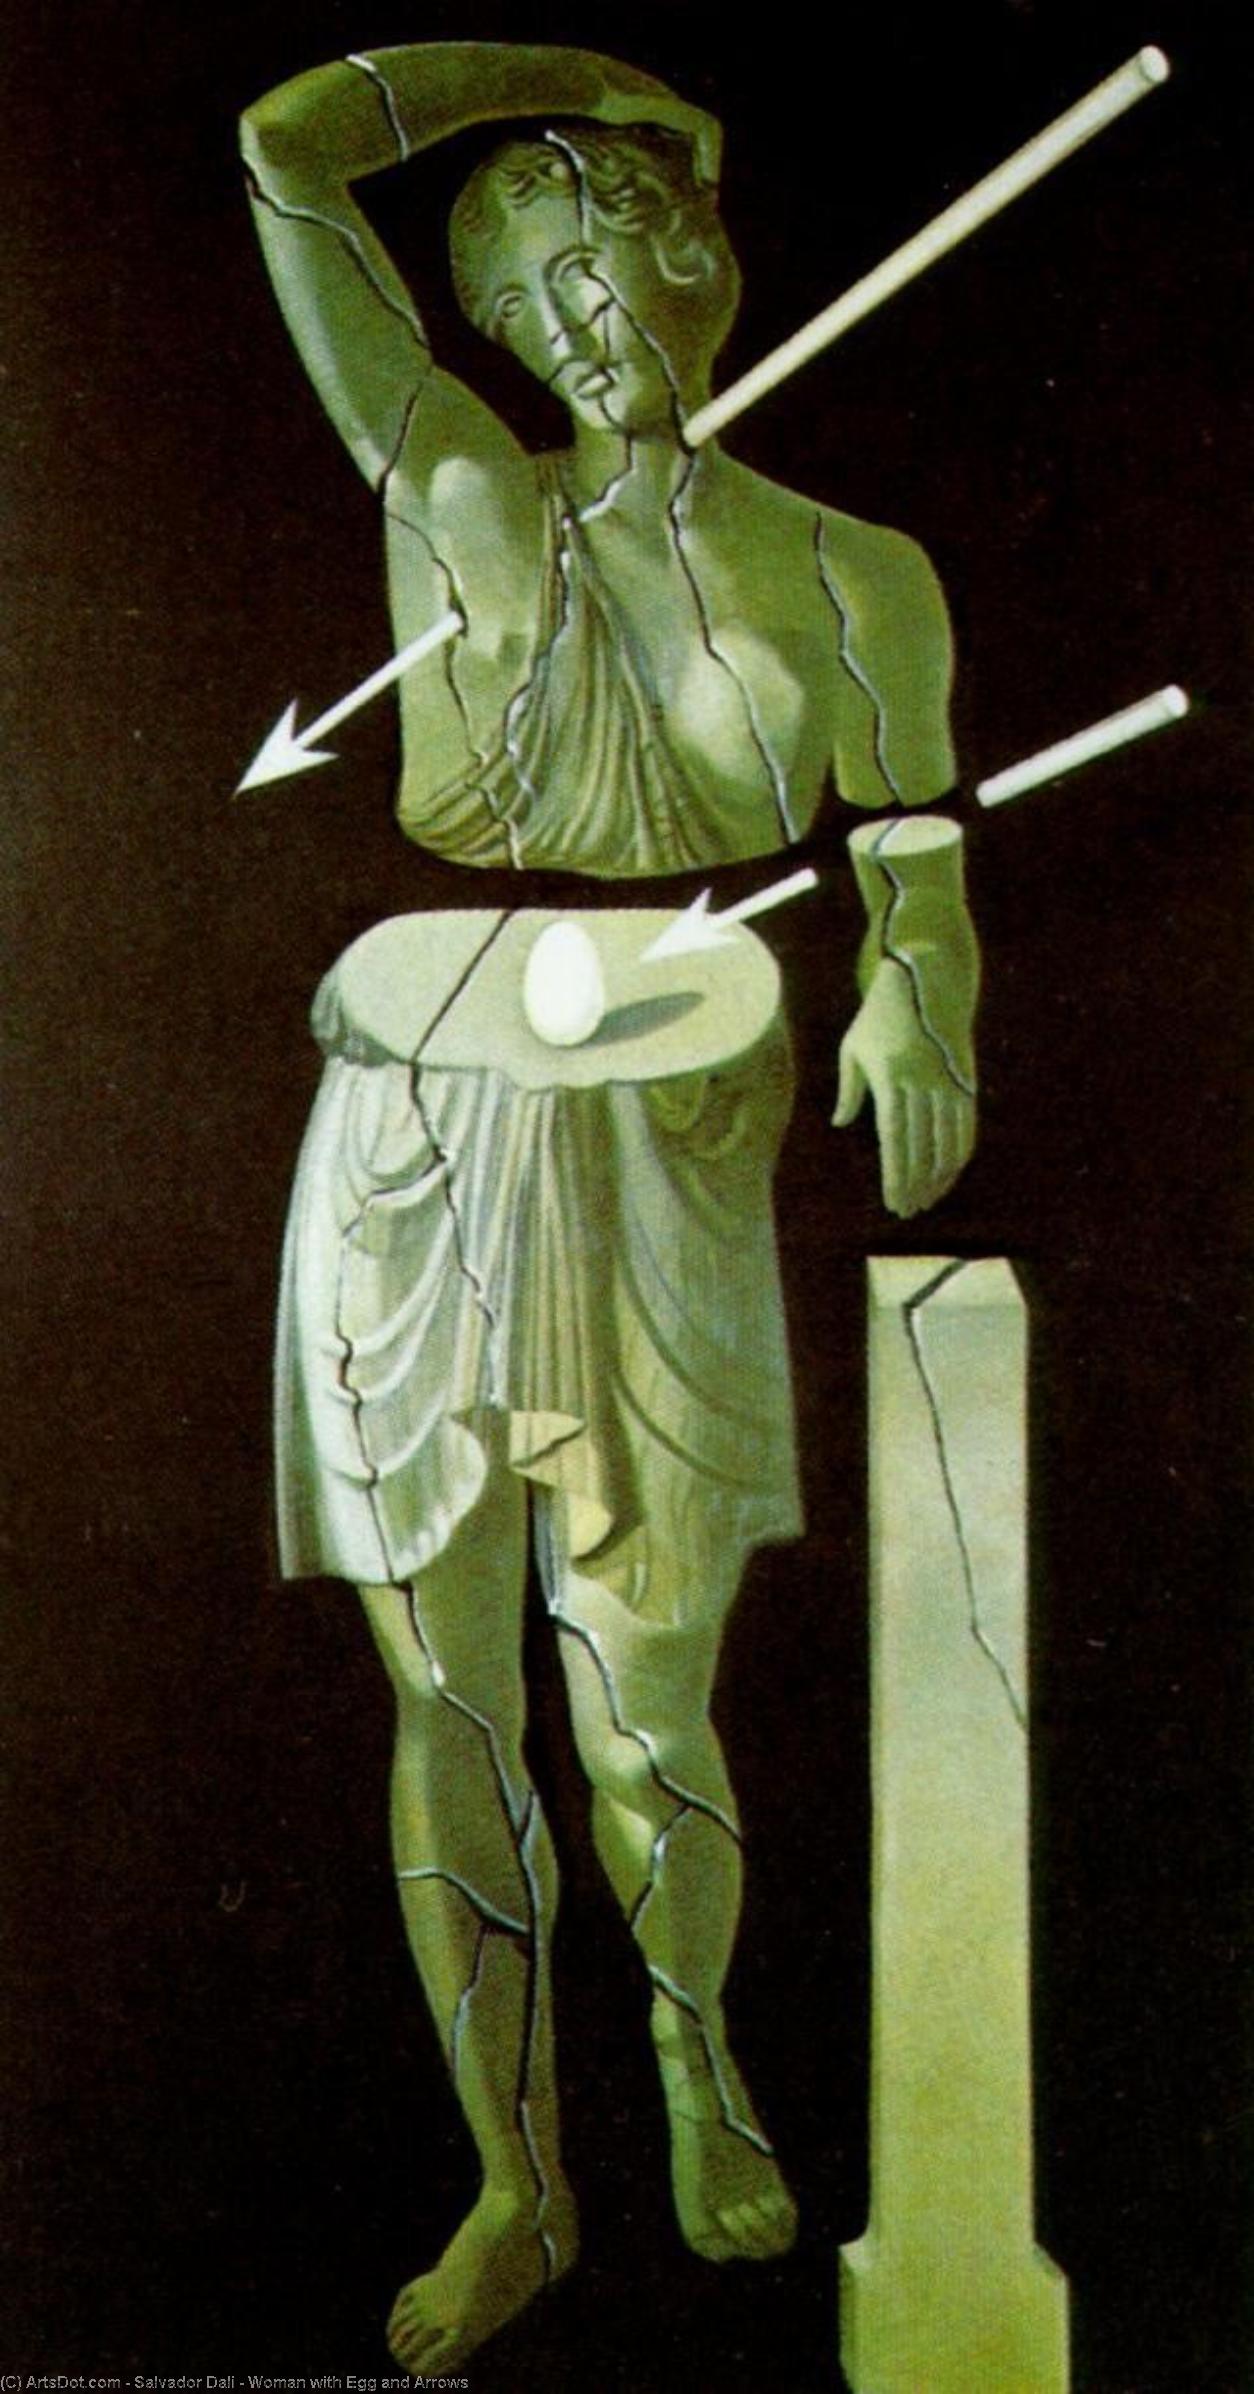 WikiOO.org - Енциклопедія образотворчого мистецтва - Живопис, Картини
 Salvador Dali - Woman with Egg and Arrows